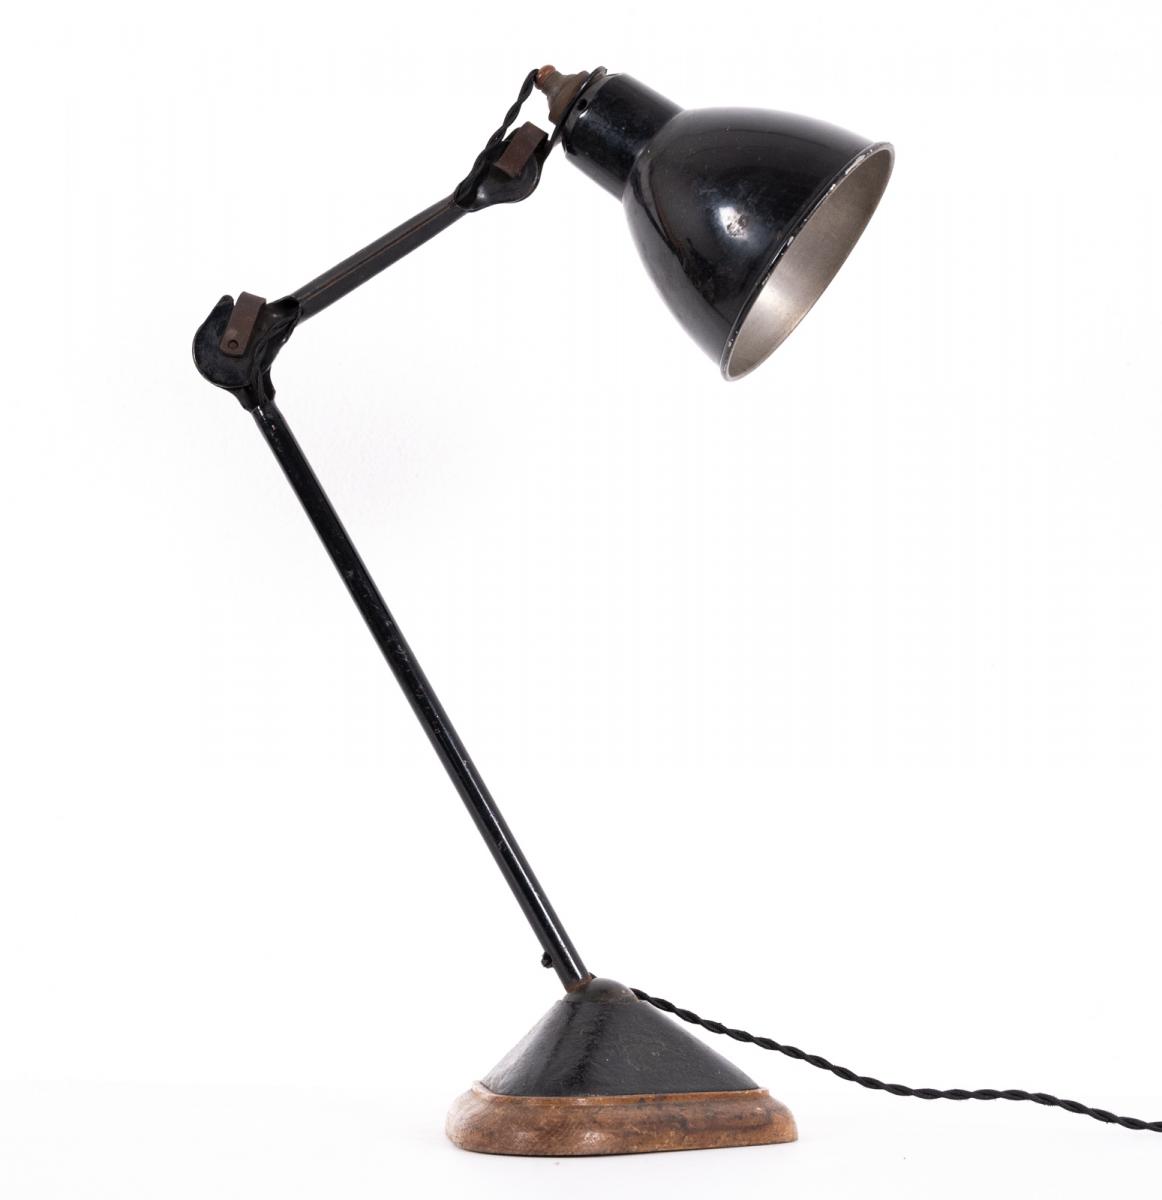 Gras Ravel 207 Model Adjustable Table Lamp